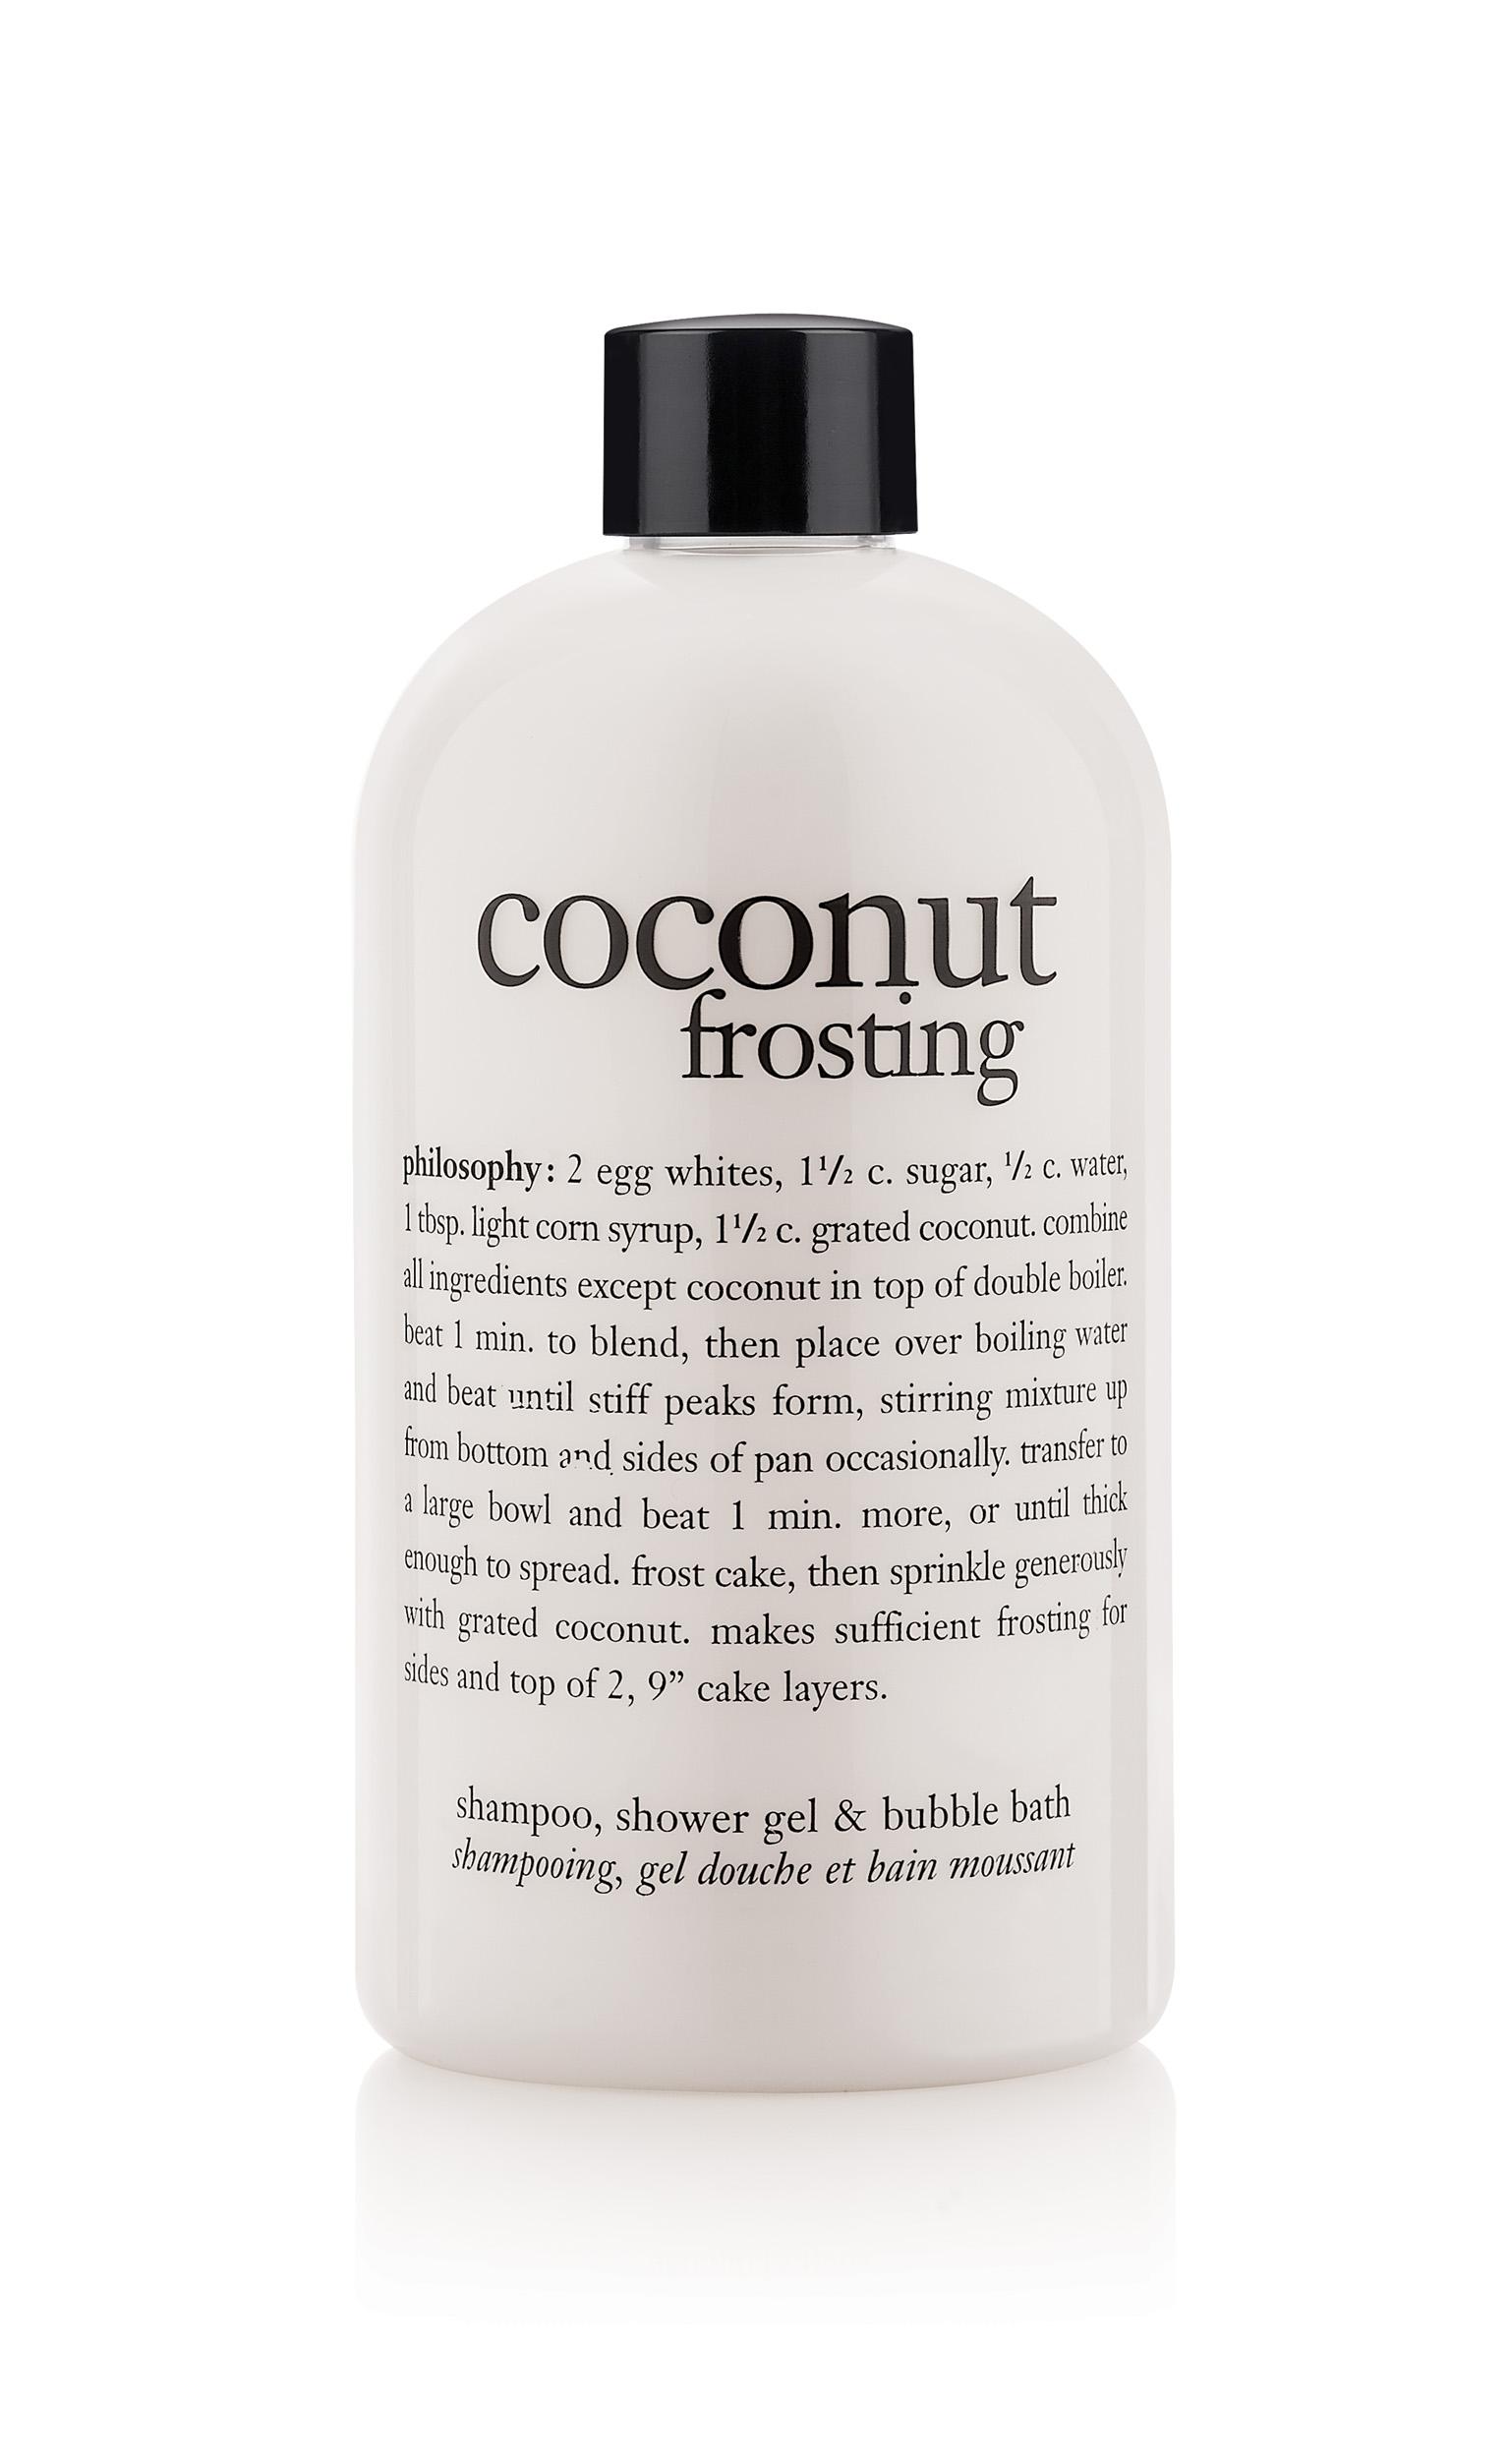 Coconut Frosting Shampoo, Shower Gel & Bubble Bath - Philosophy